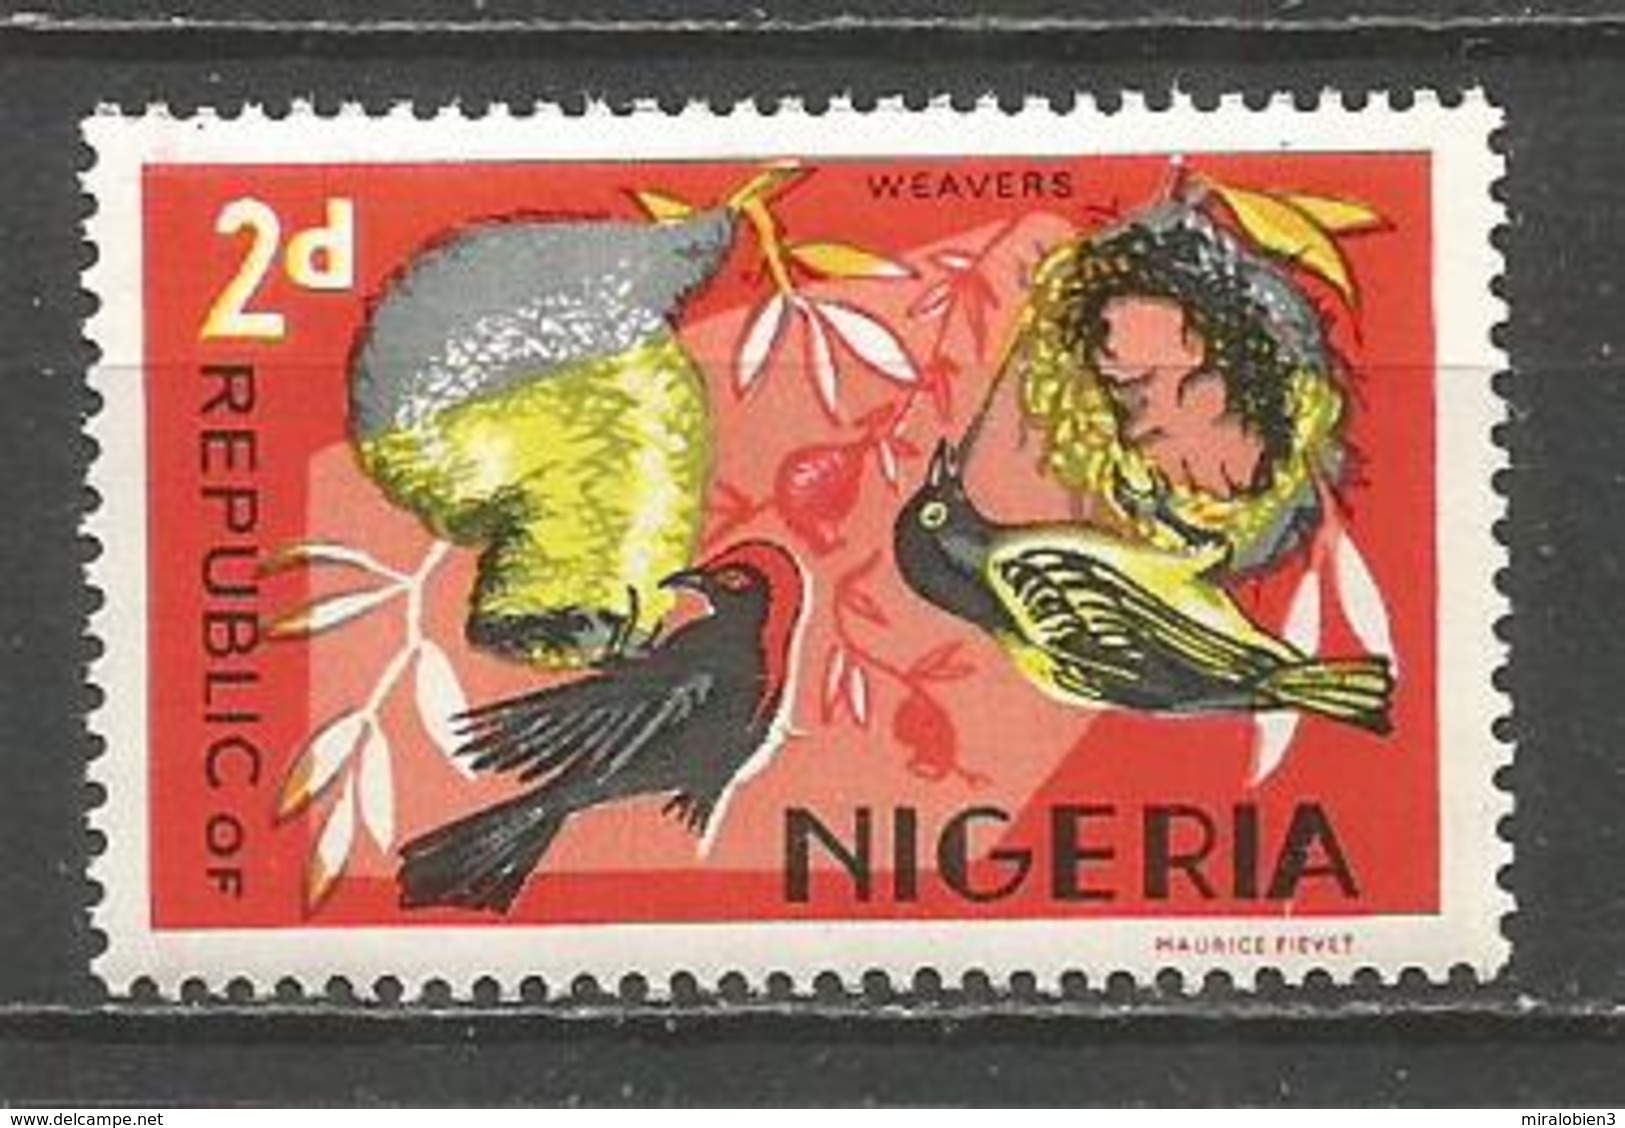 NIGERIA AVES FAUNA YVERT NUM. 180 ** NUEVO SIN FIJASELLOS - Nigeria (1961-...)